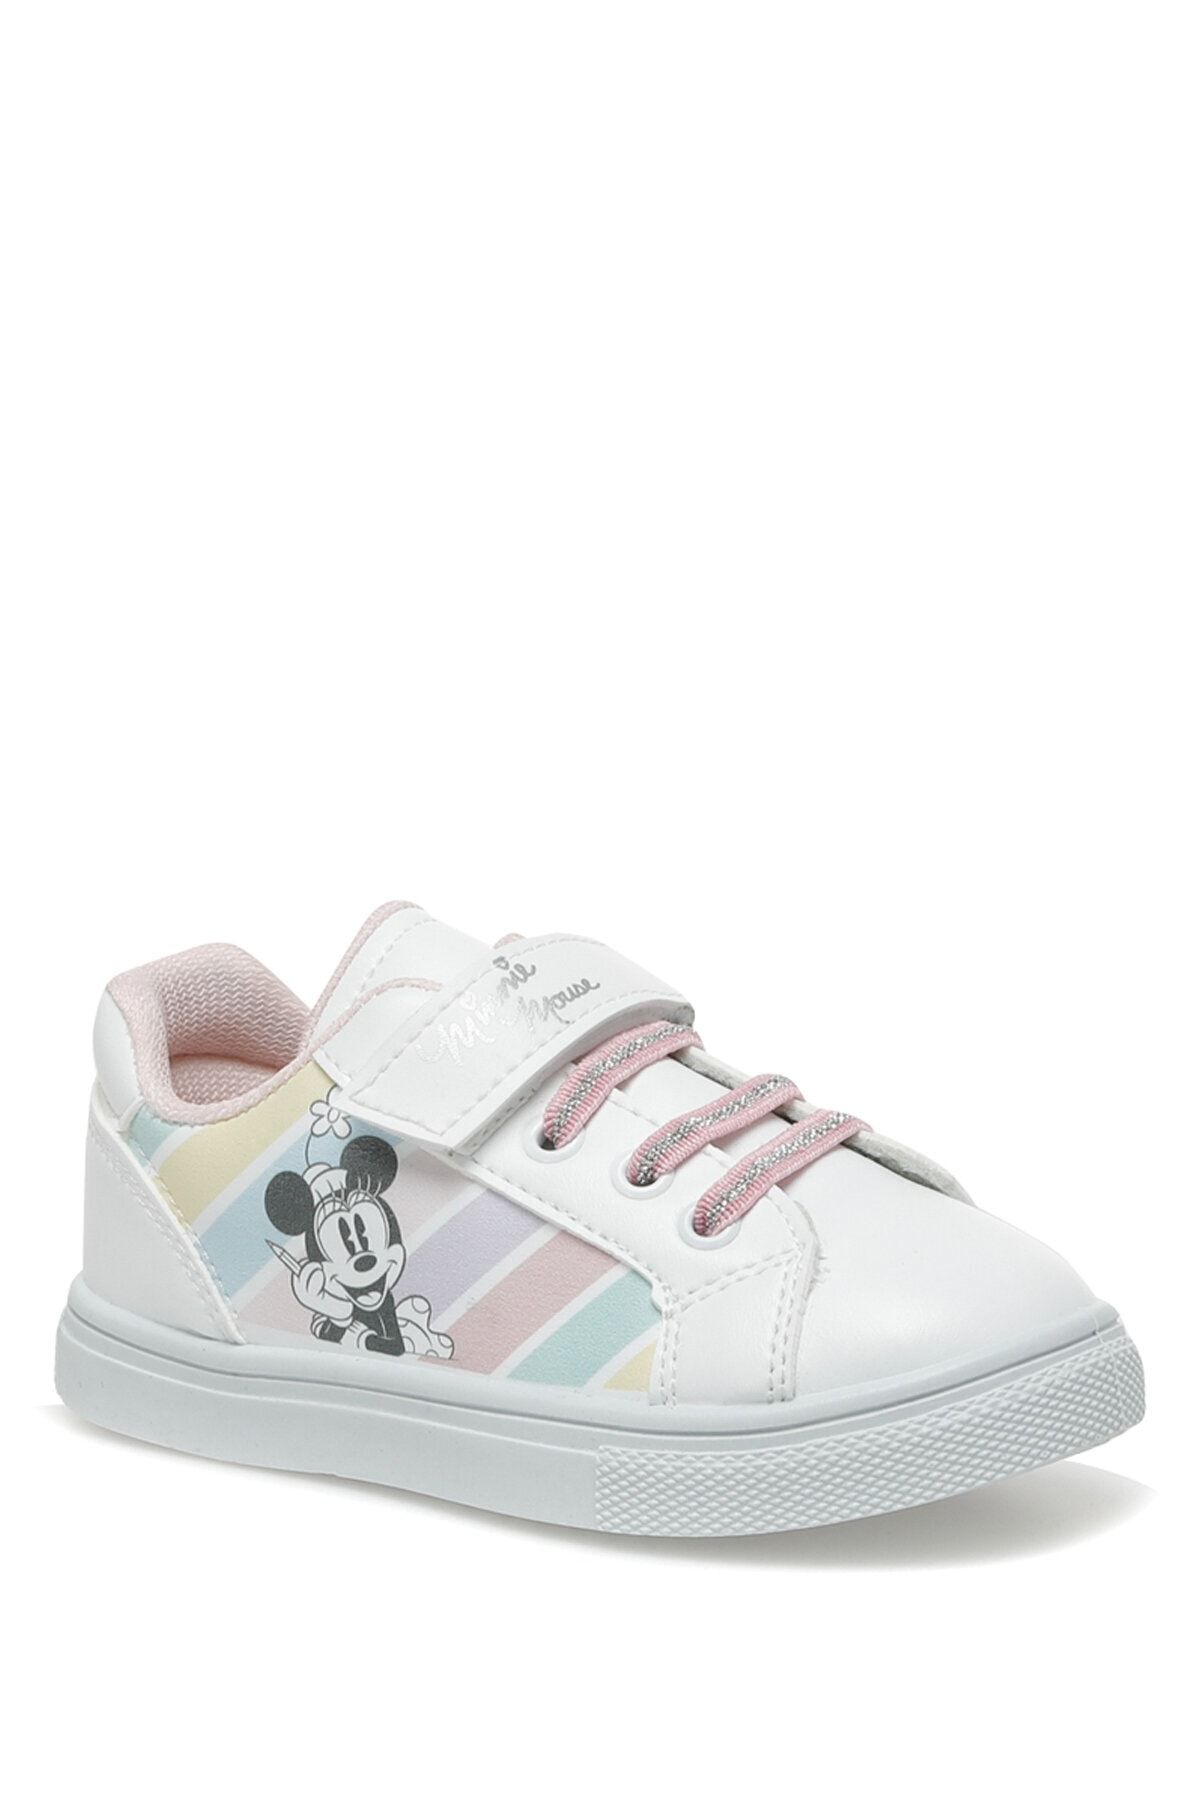 Mickey Mouse Gody.p3fx Beyaz Kız Çocuk Sneaker